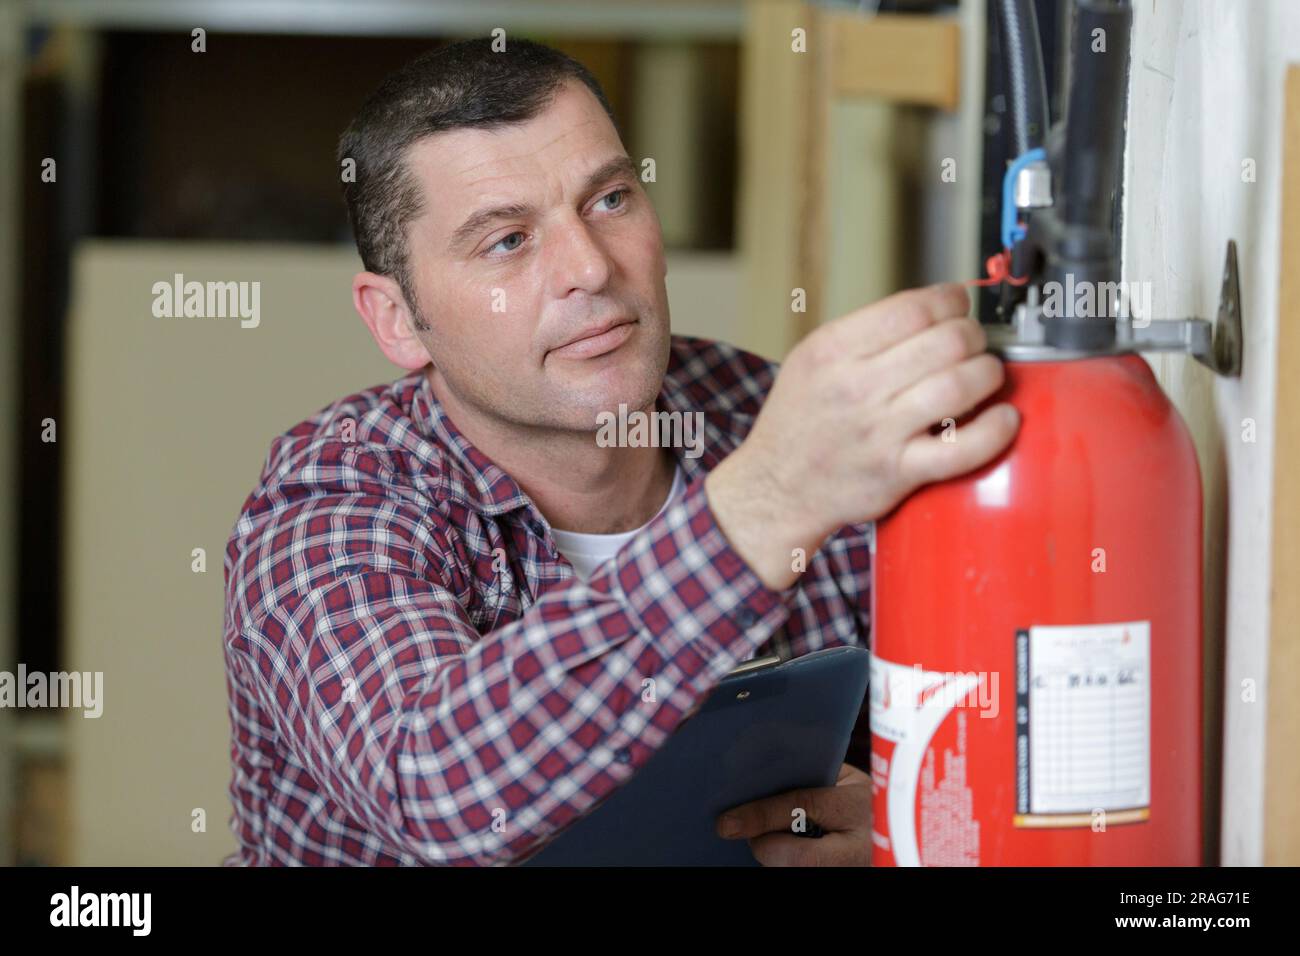 man using fire extinguisher against grey background Stock Photo